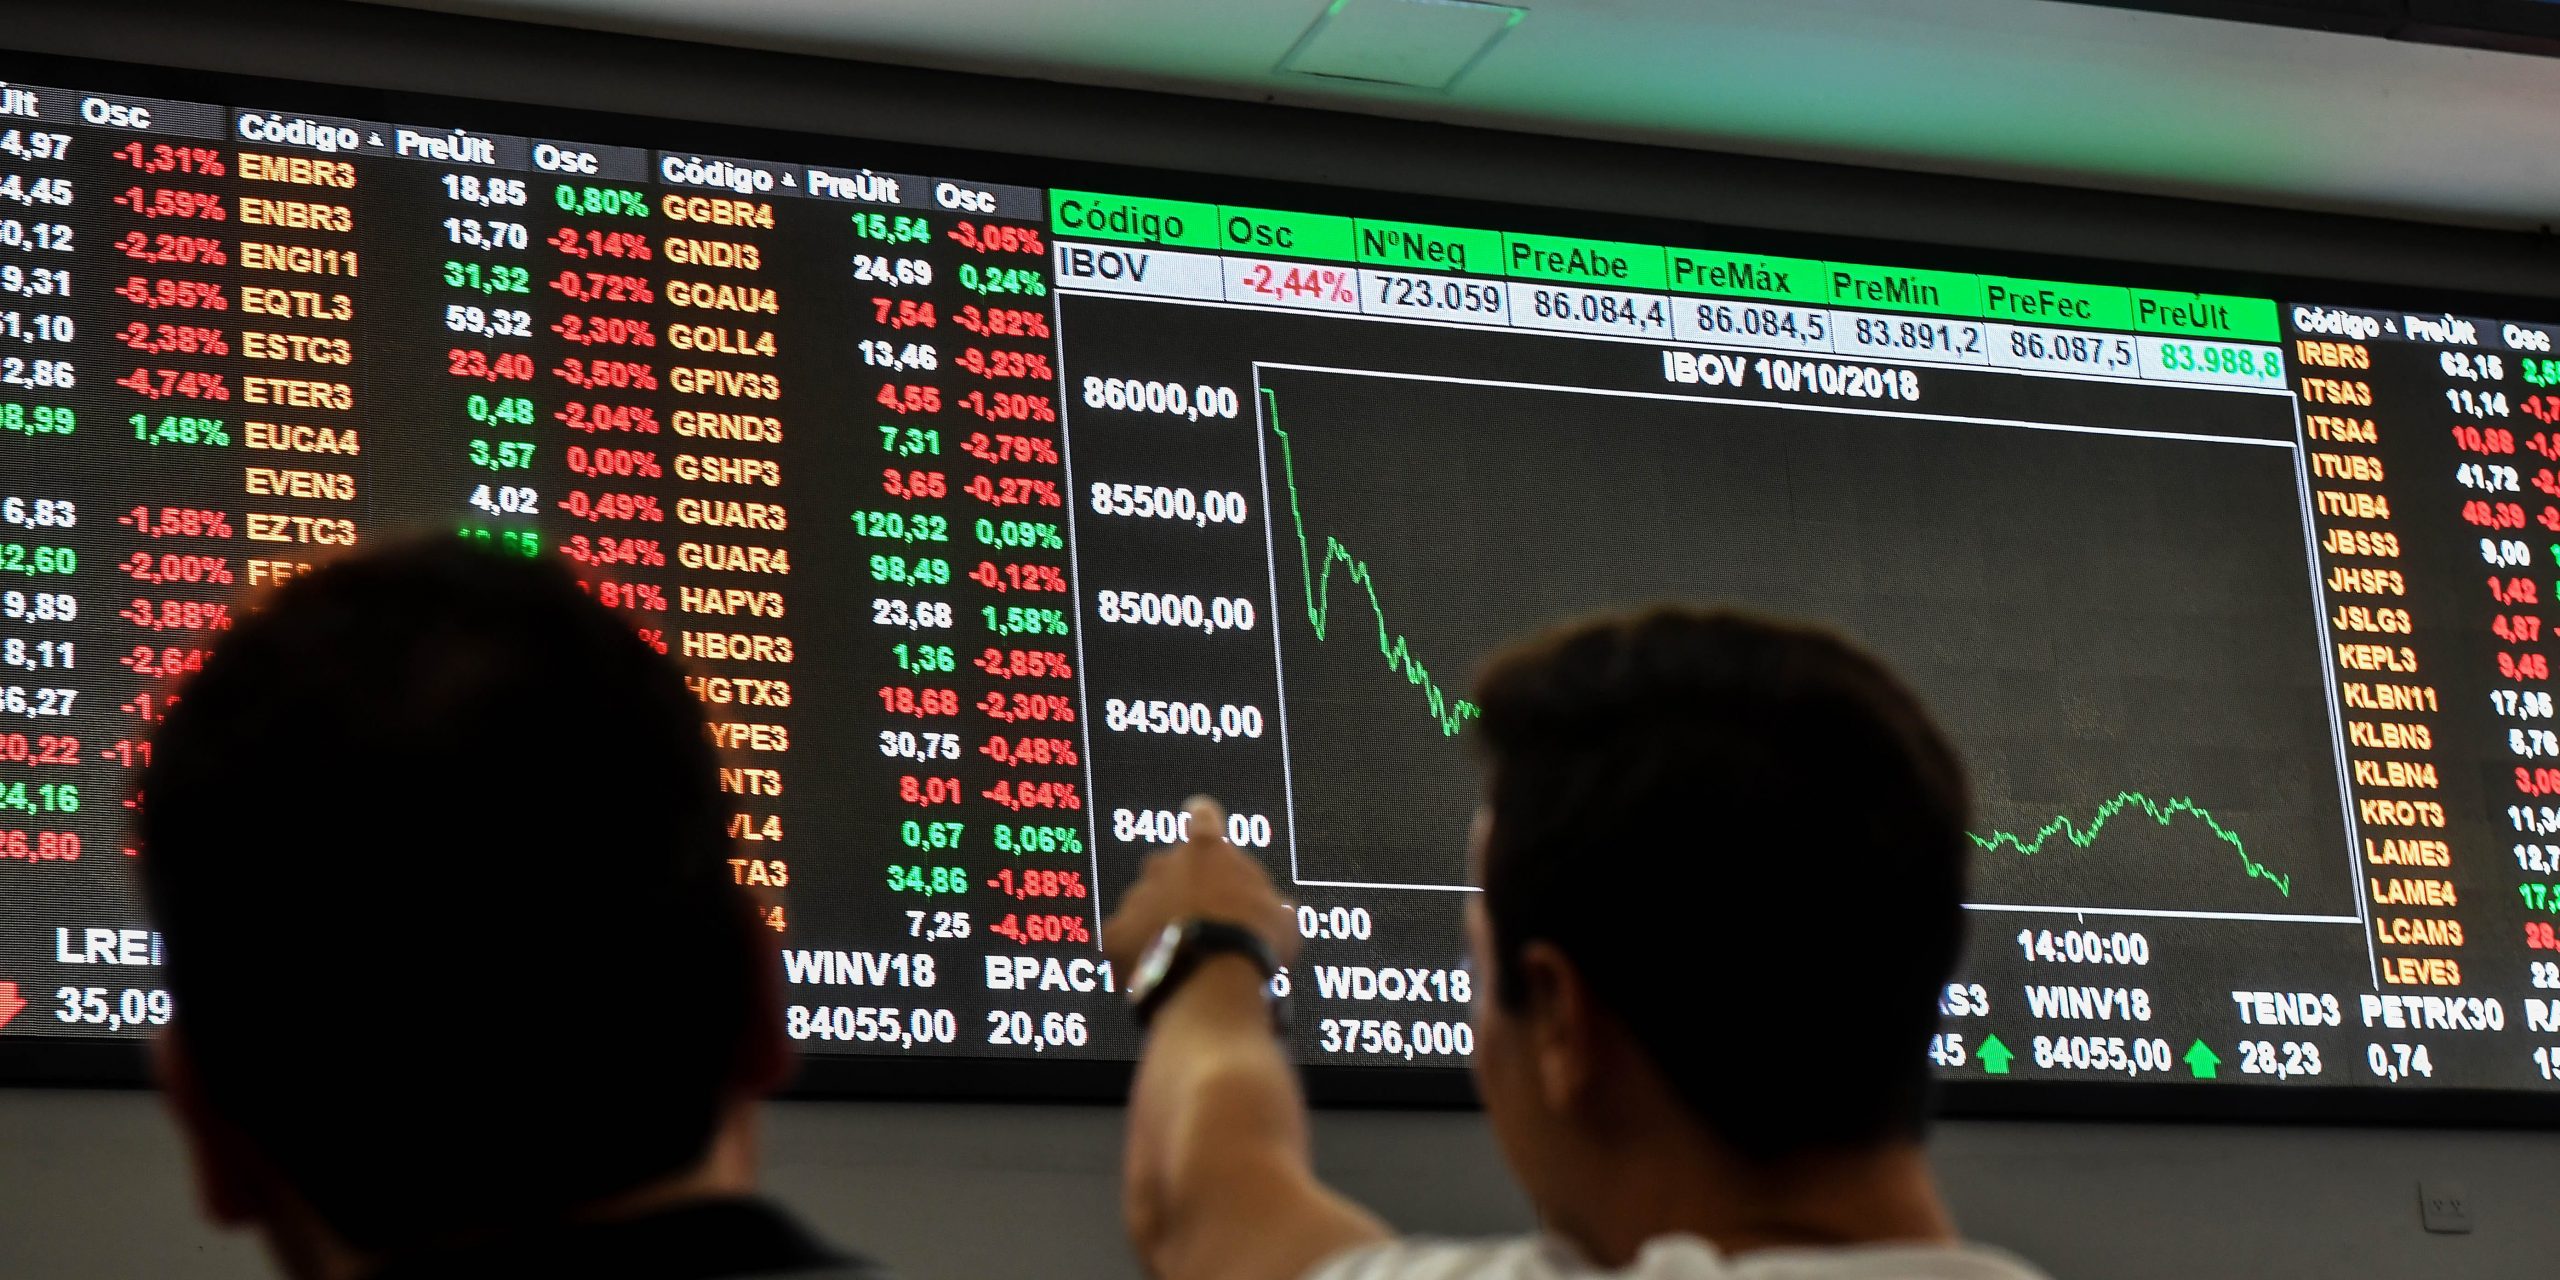 Stock exchange traders